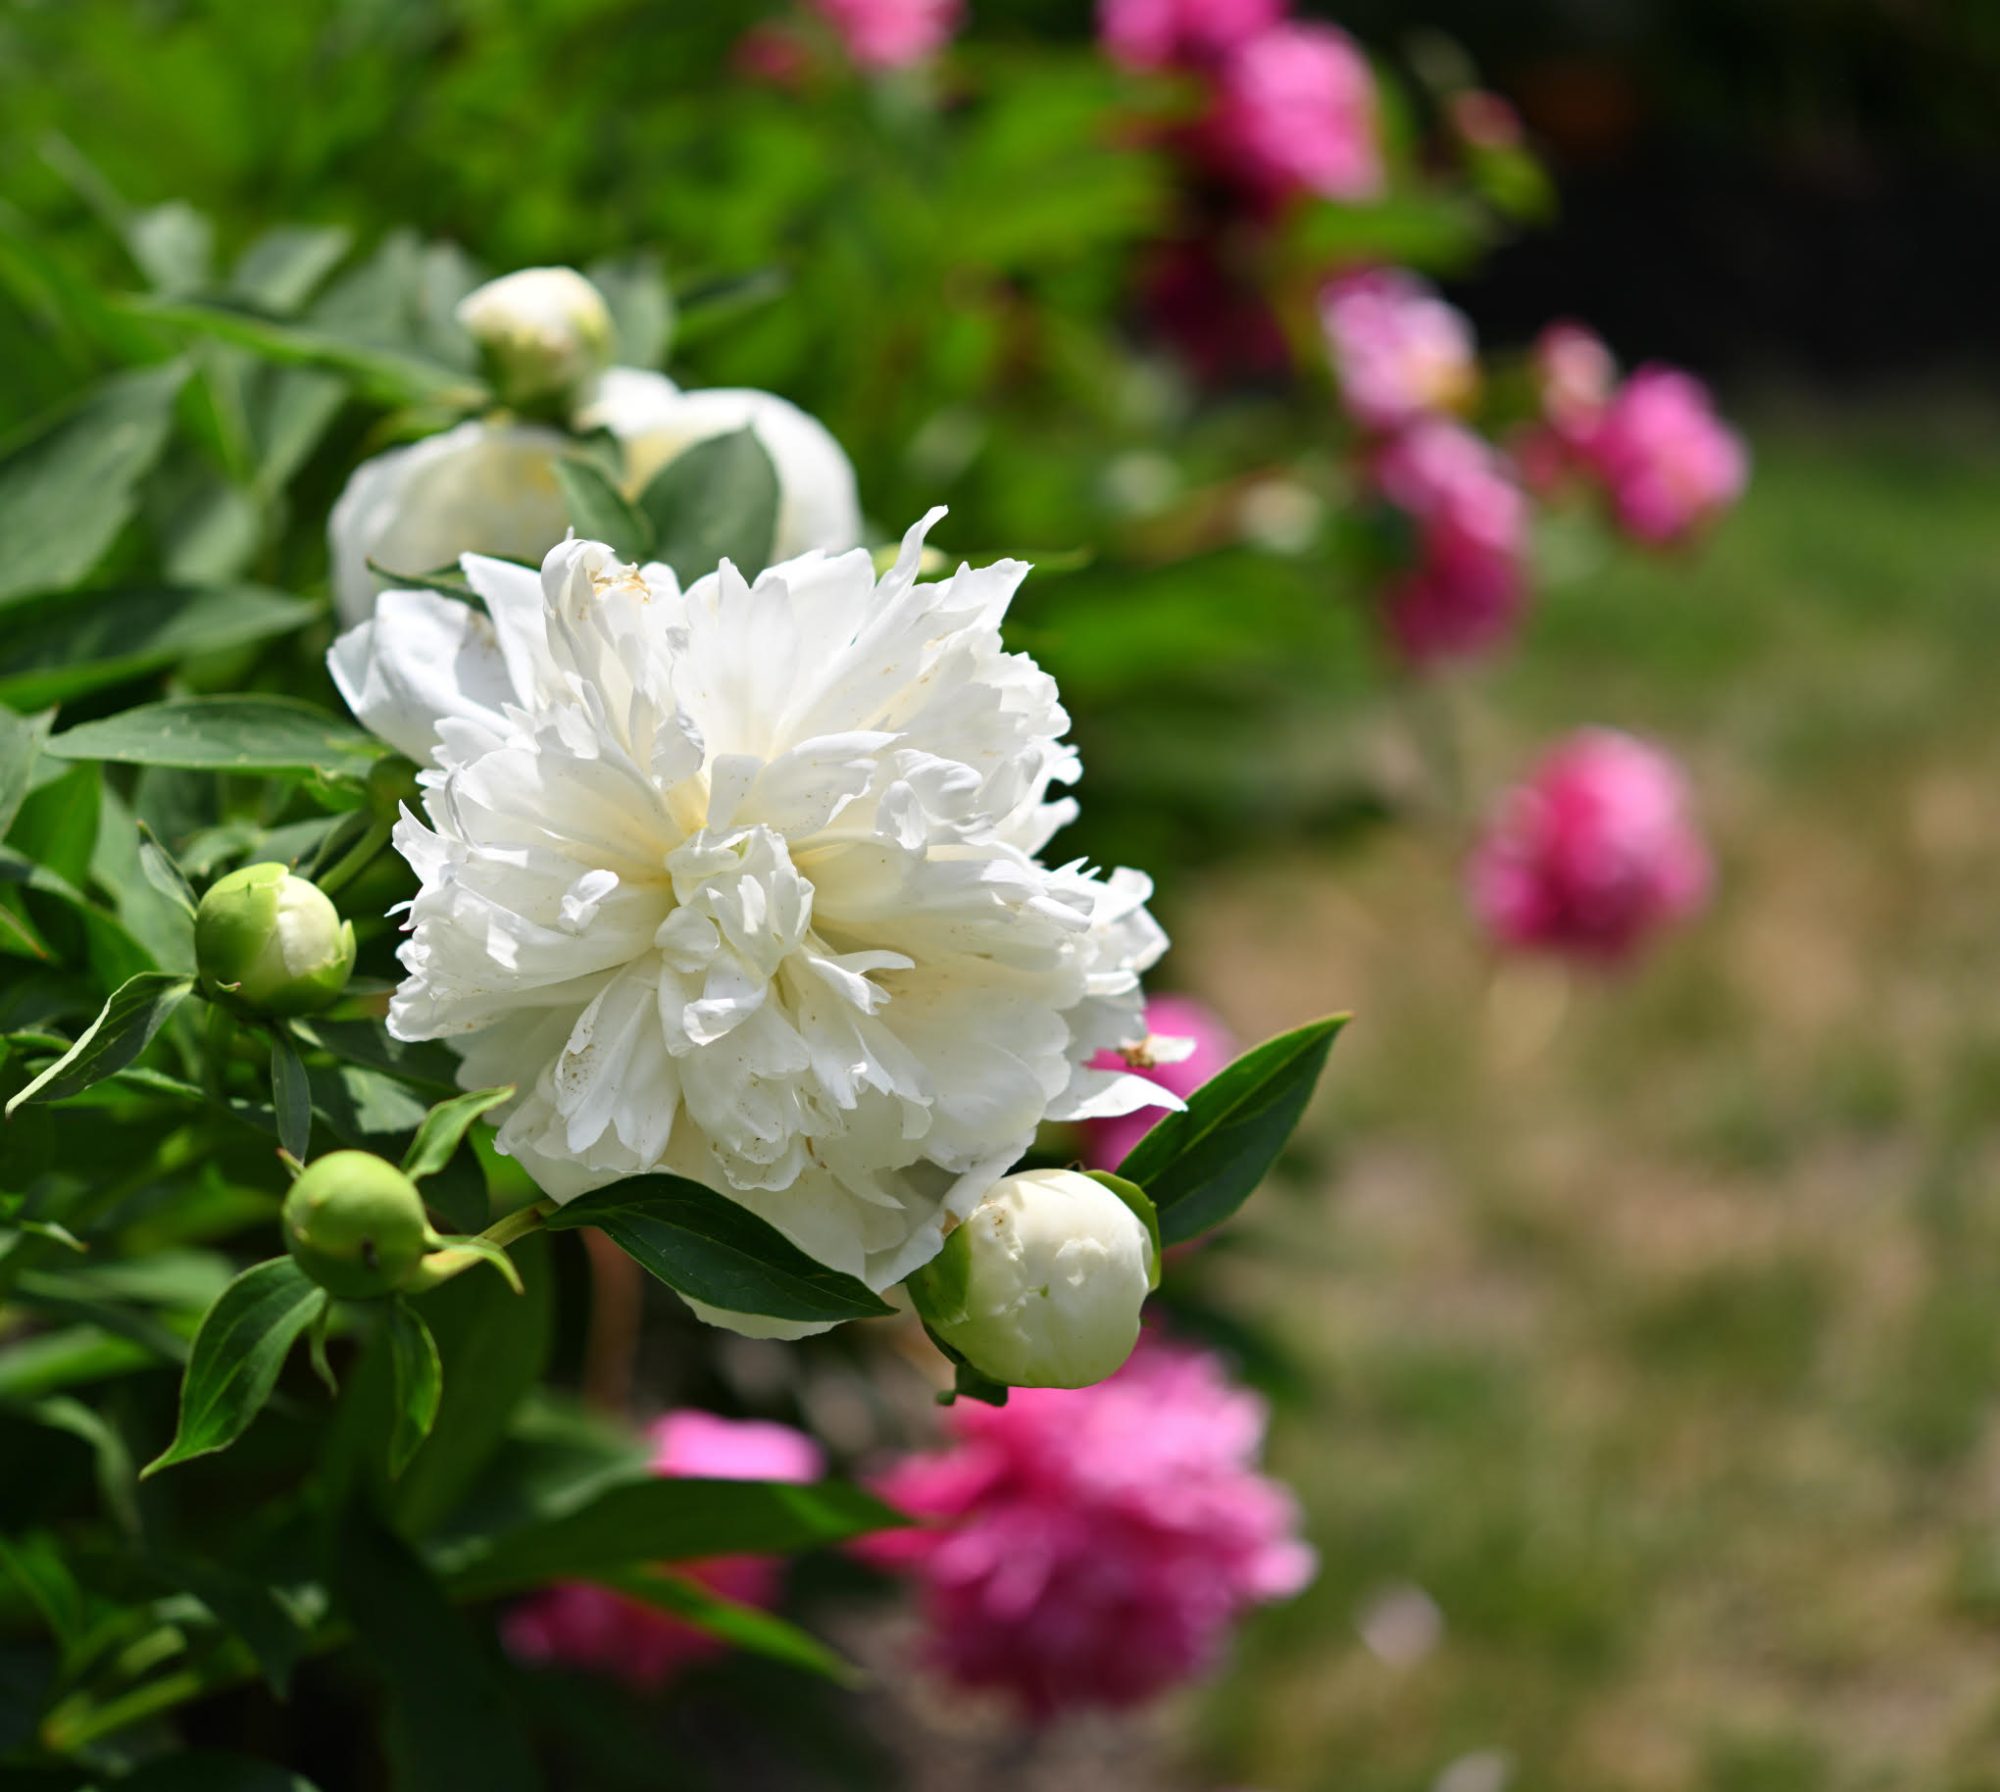 A pristine white bloom adorning a plant.